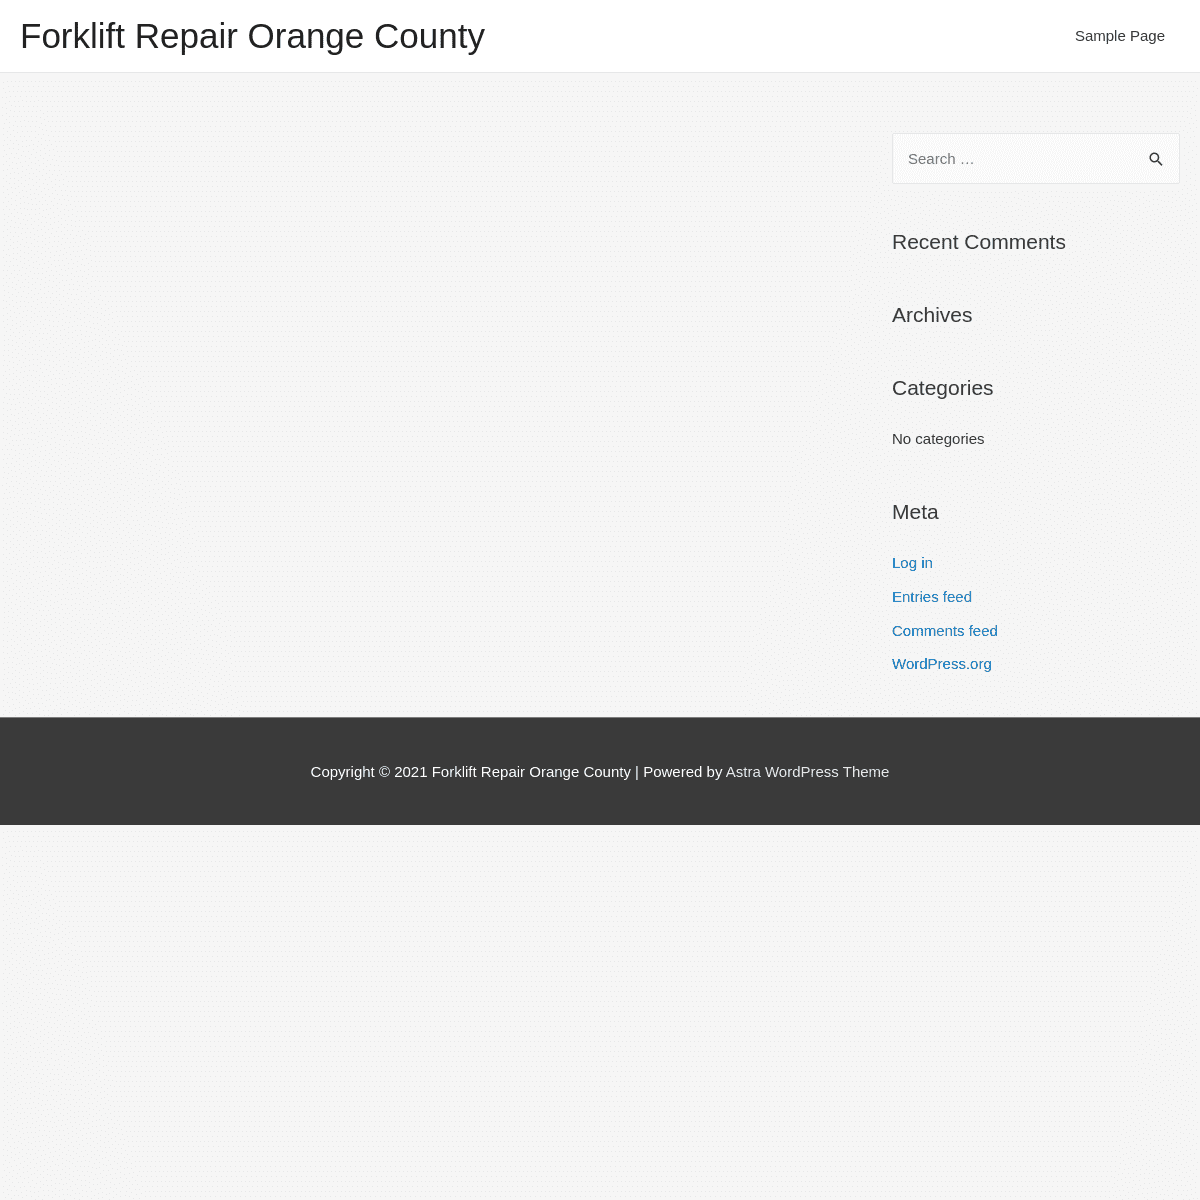 A complete backup of https://forkliftrepairorangecounty.com